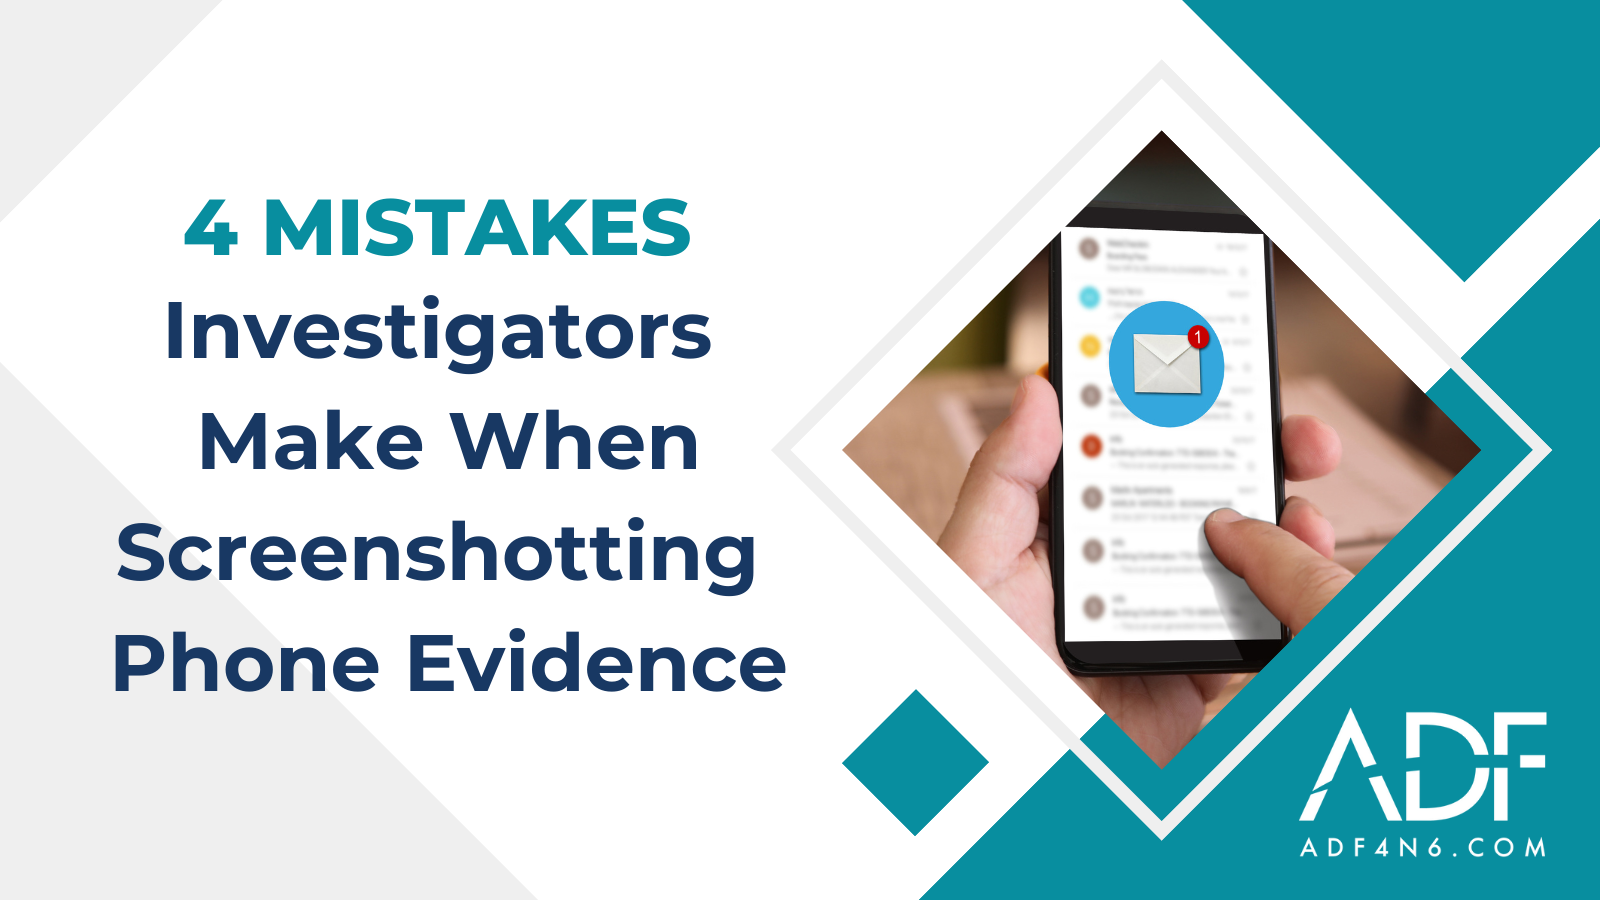 4 Mistakes Investigators Make When Screenshotting Phone Evidence